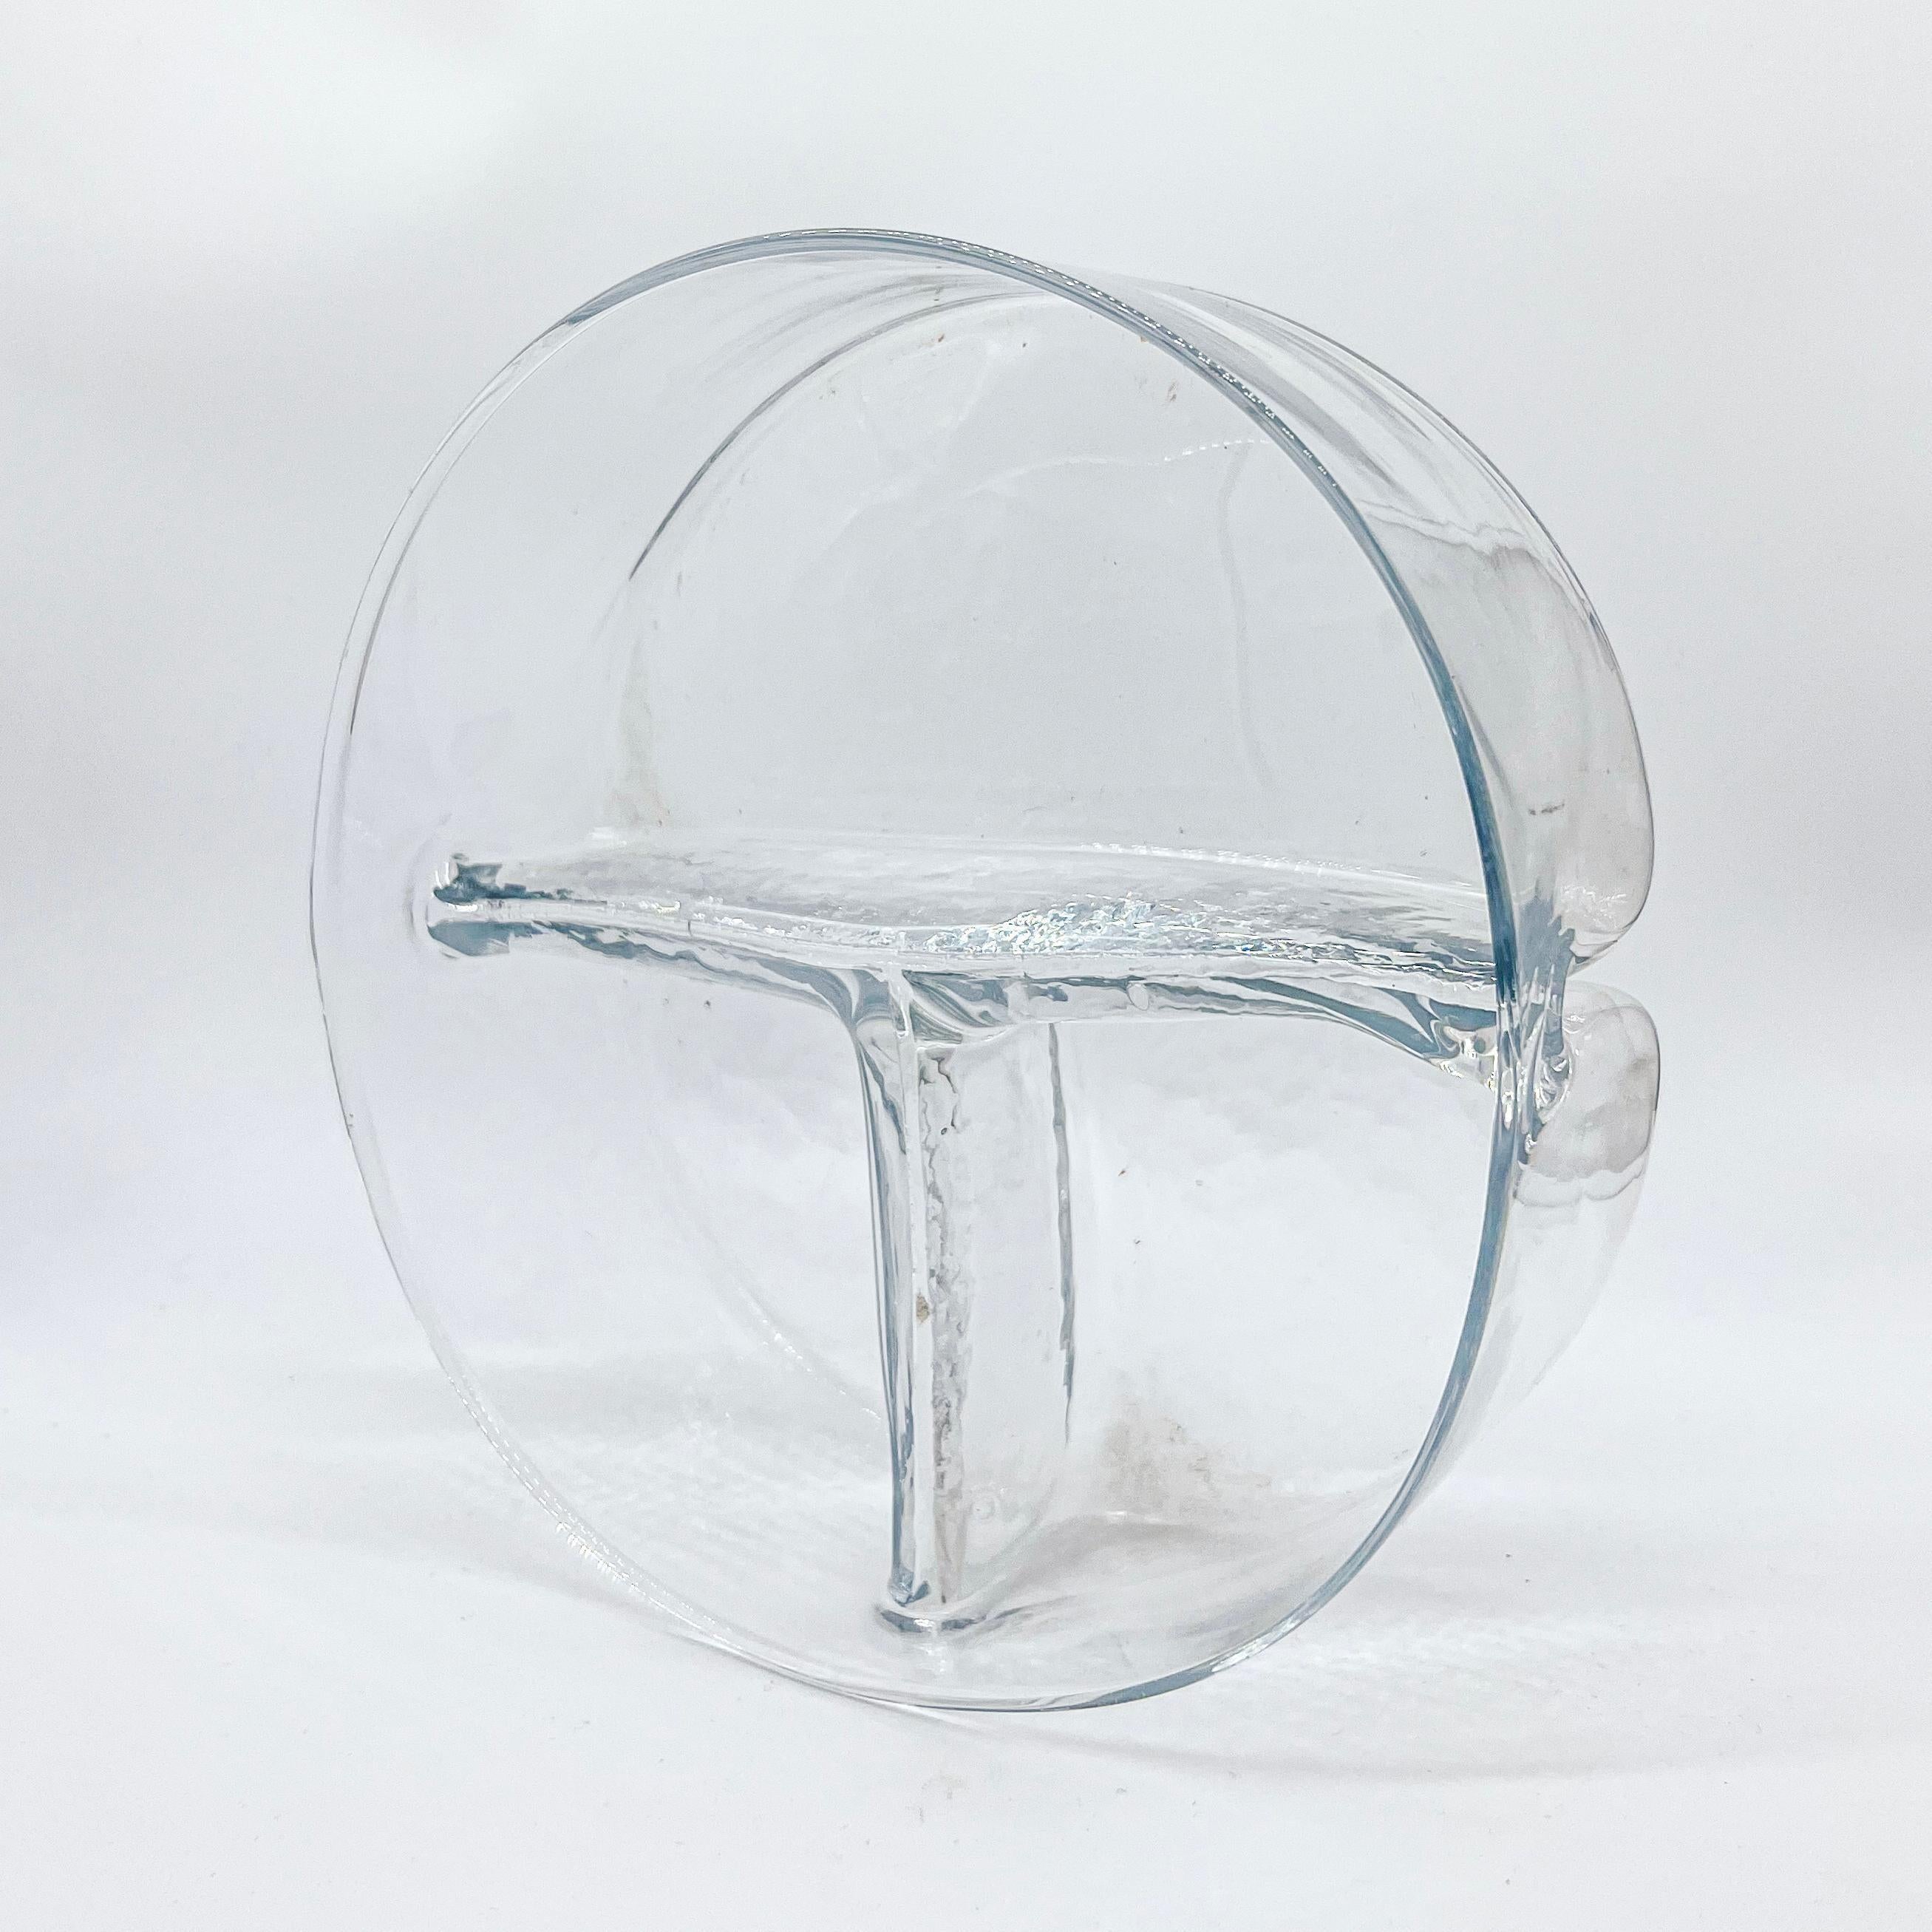 Vintage Murano glass valet tray / vide poche / sculpture, created by celebrated Italian designer Toni Zuccheri for glassmaker Venini as part of the 